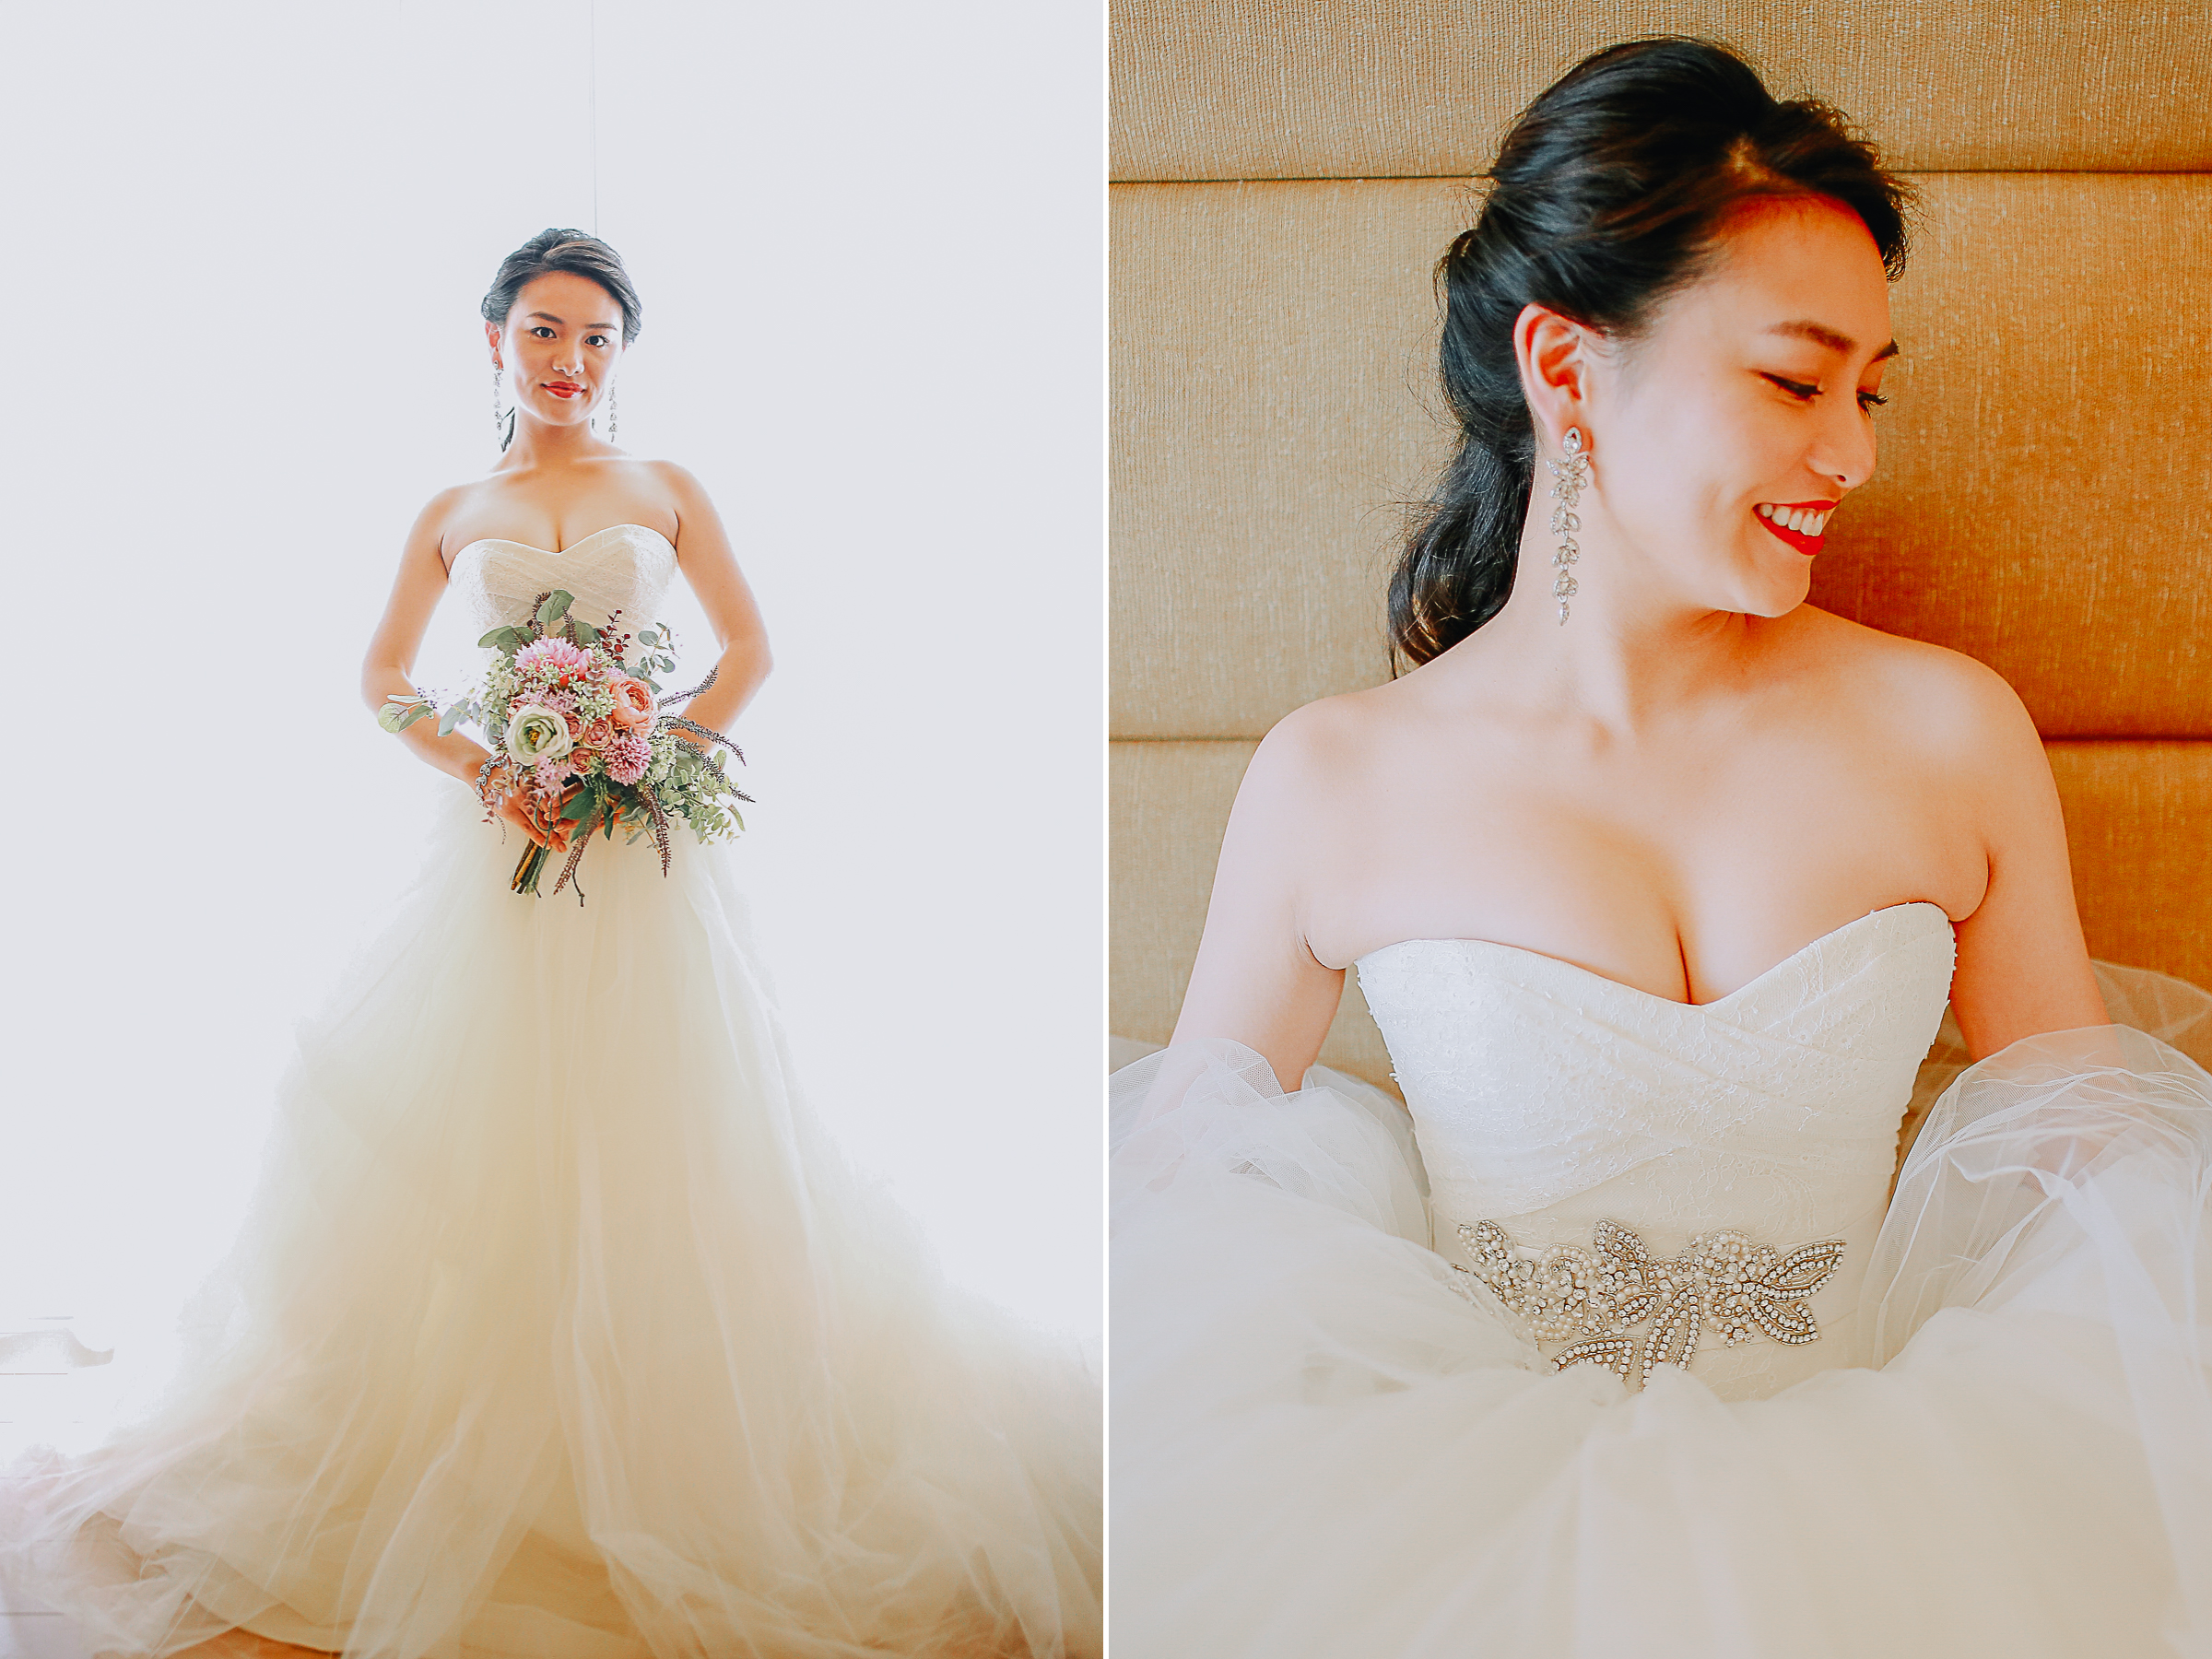 03 - Shojiro & Hiroko's Shangrila Mactan Cebu Intimate Wedding